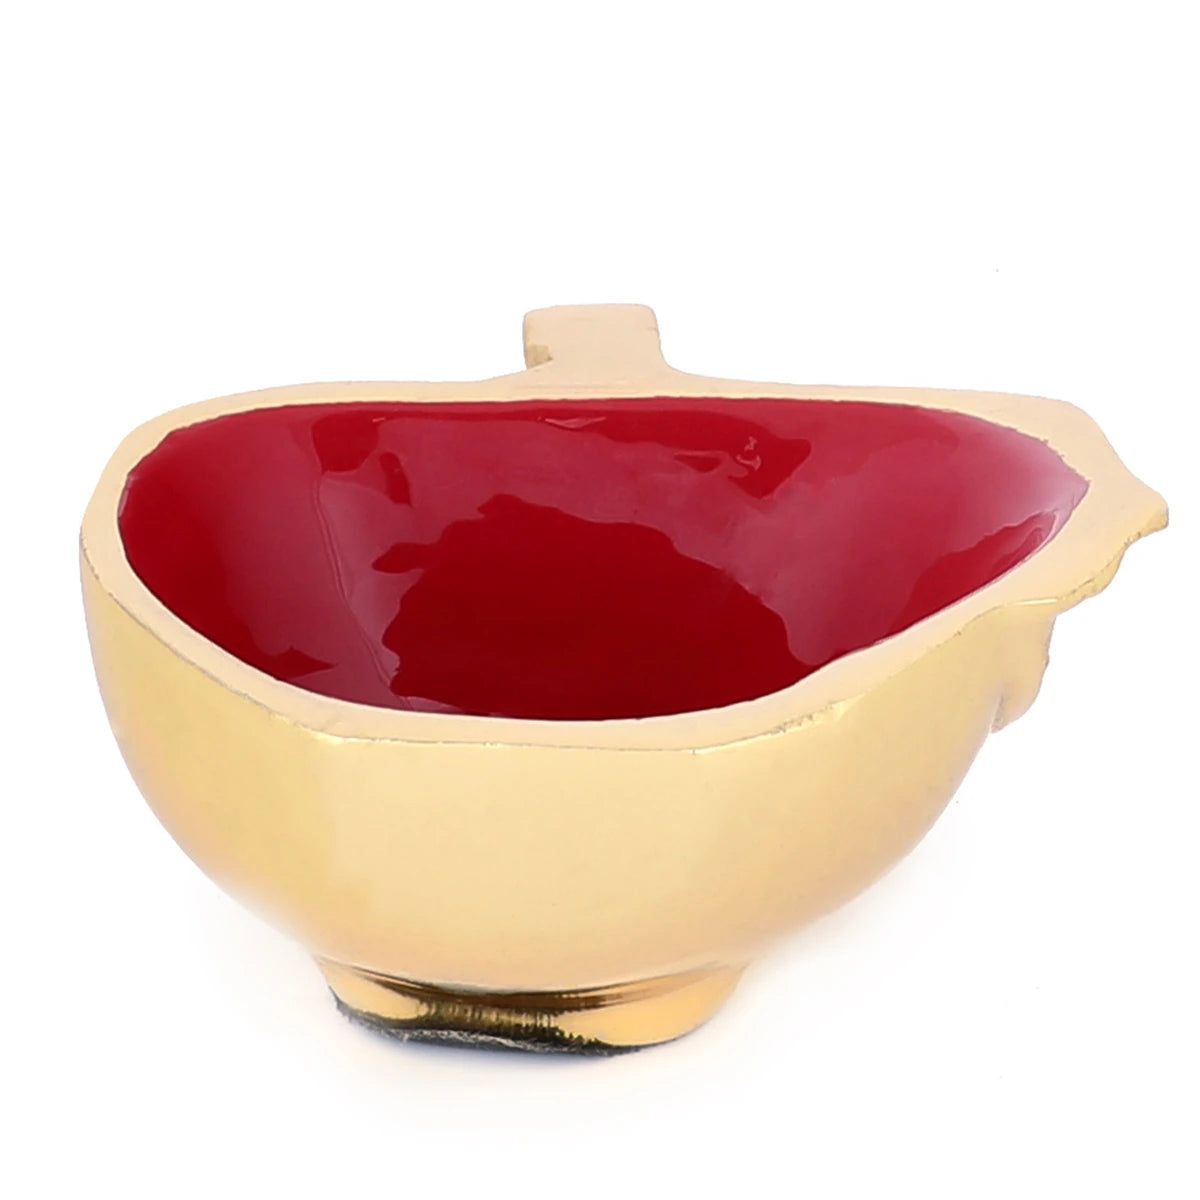 Apple Shaped Decorative Aluminum Bowl For Serving Fruits & Mixing Doughs